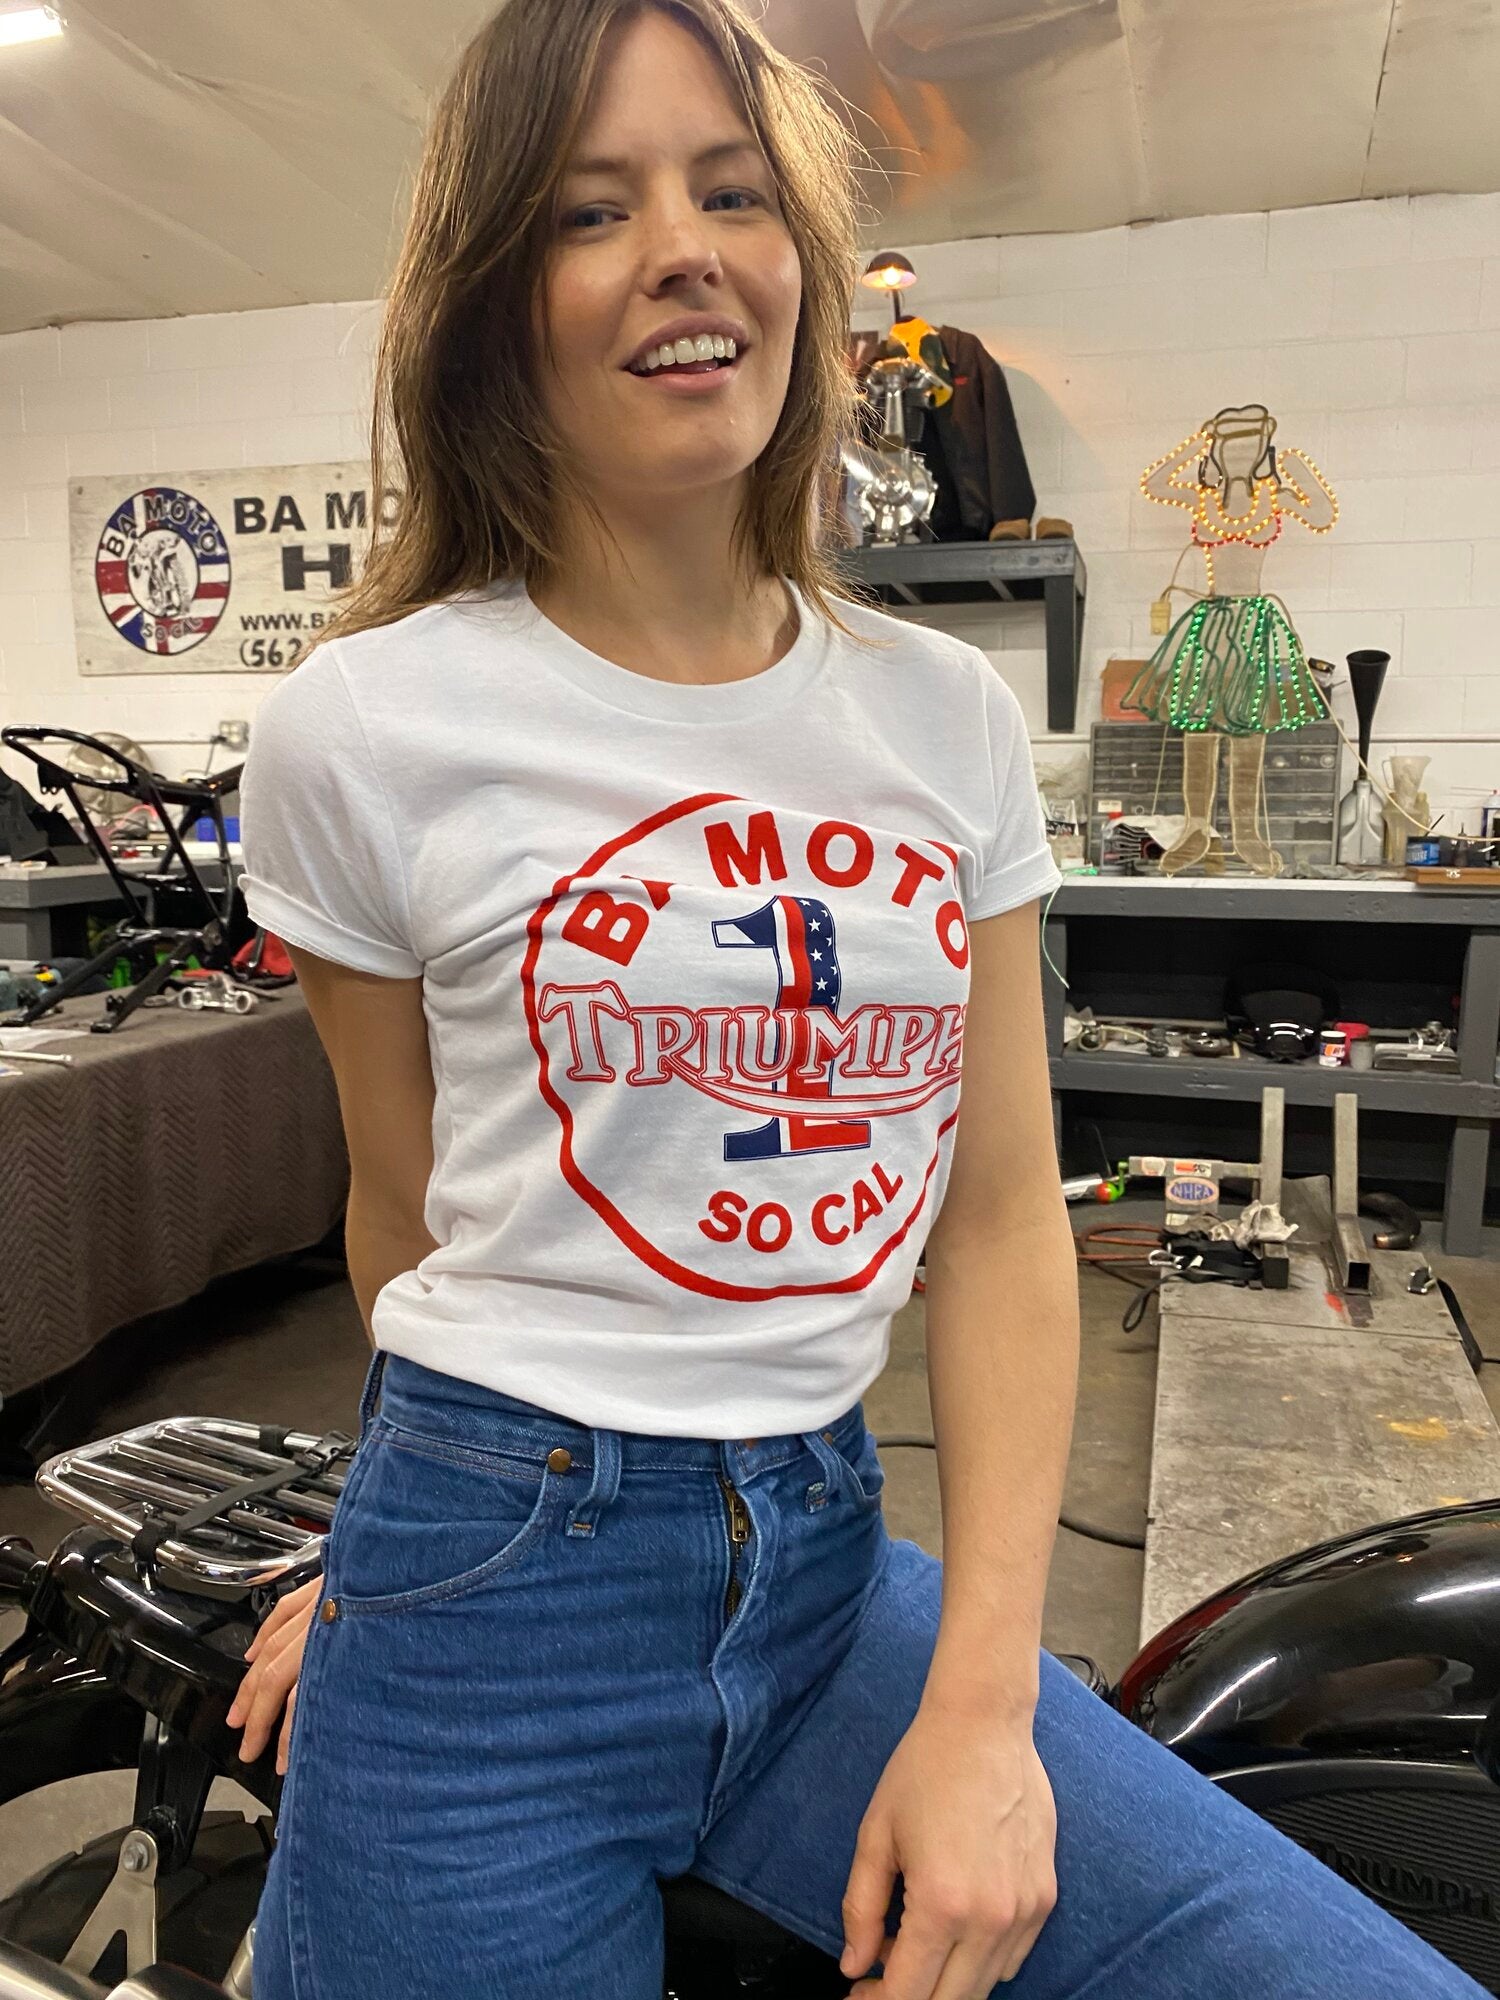 women wearing motorcycle shirt